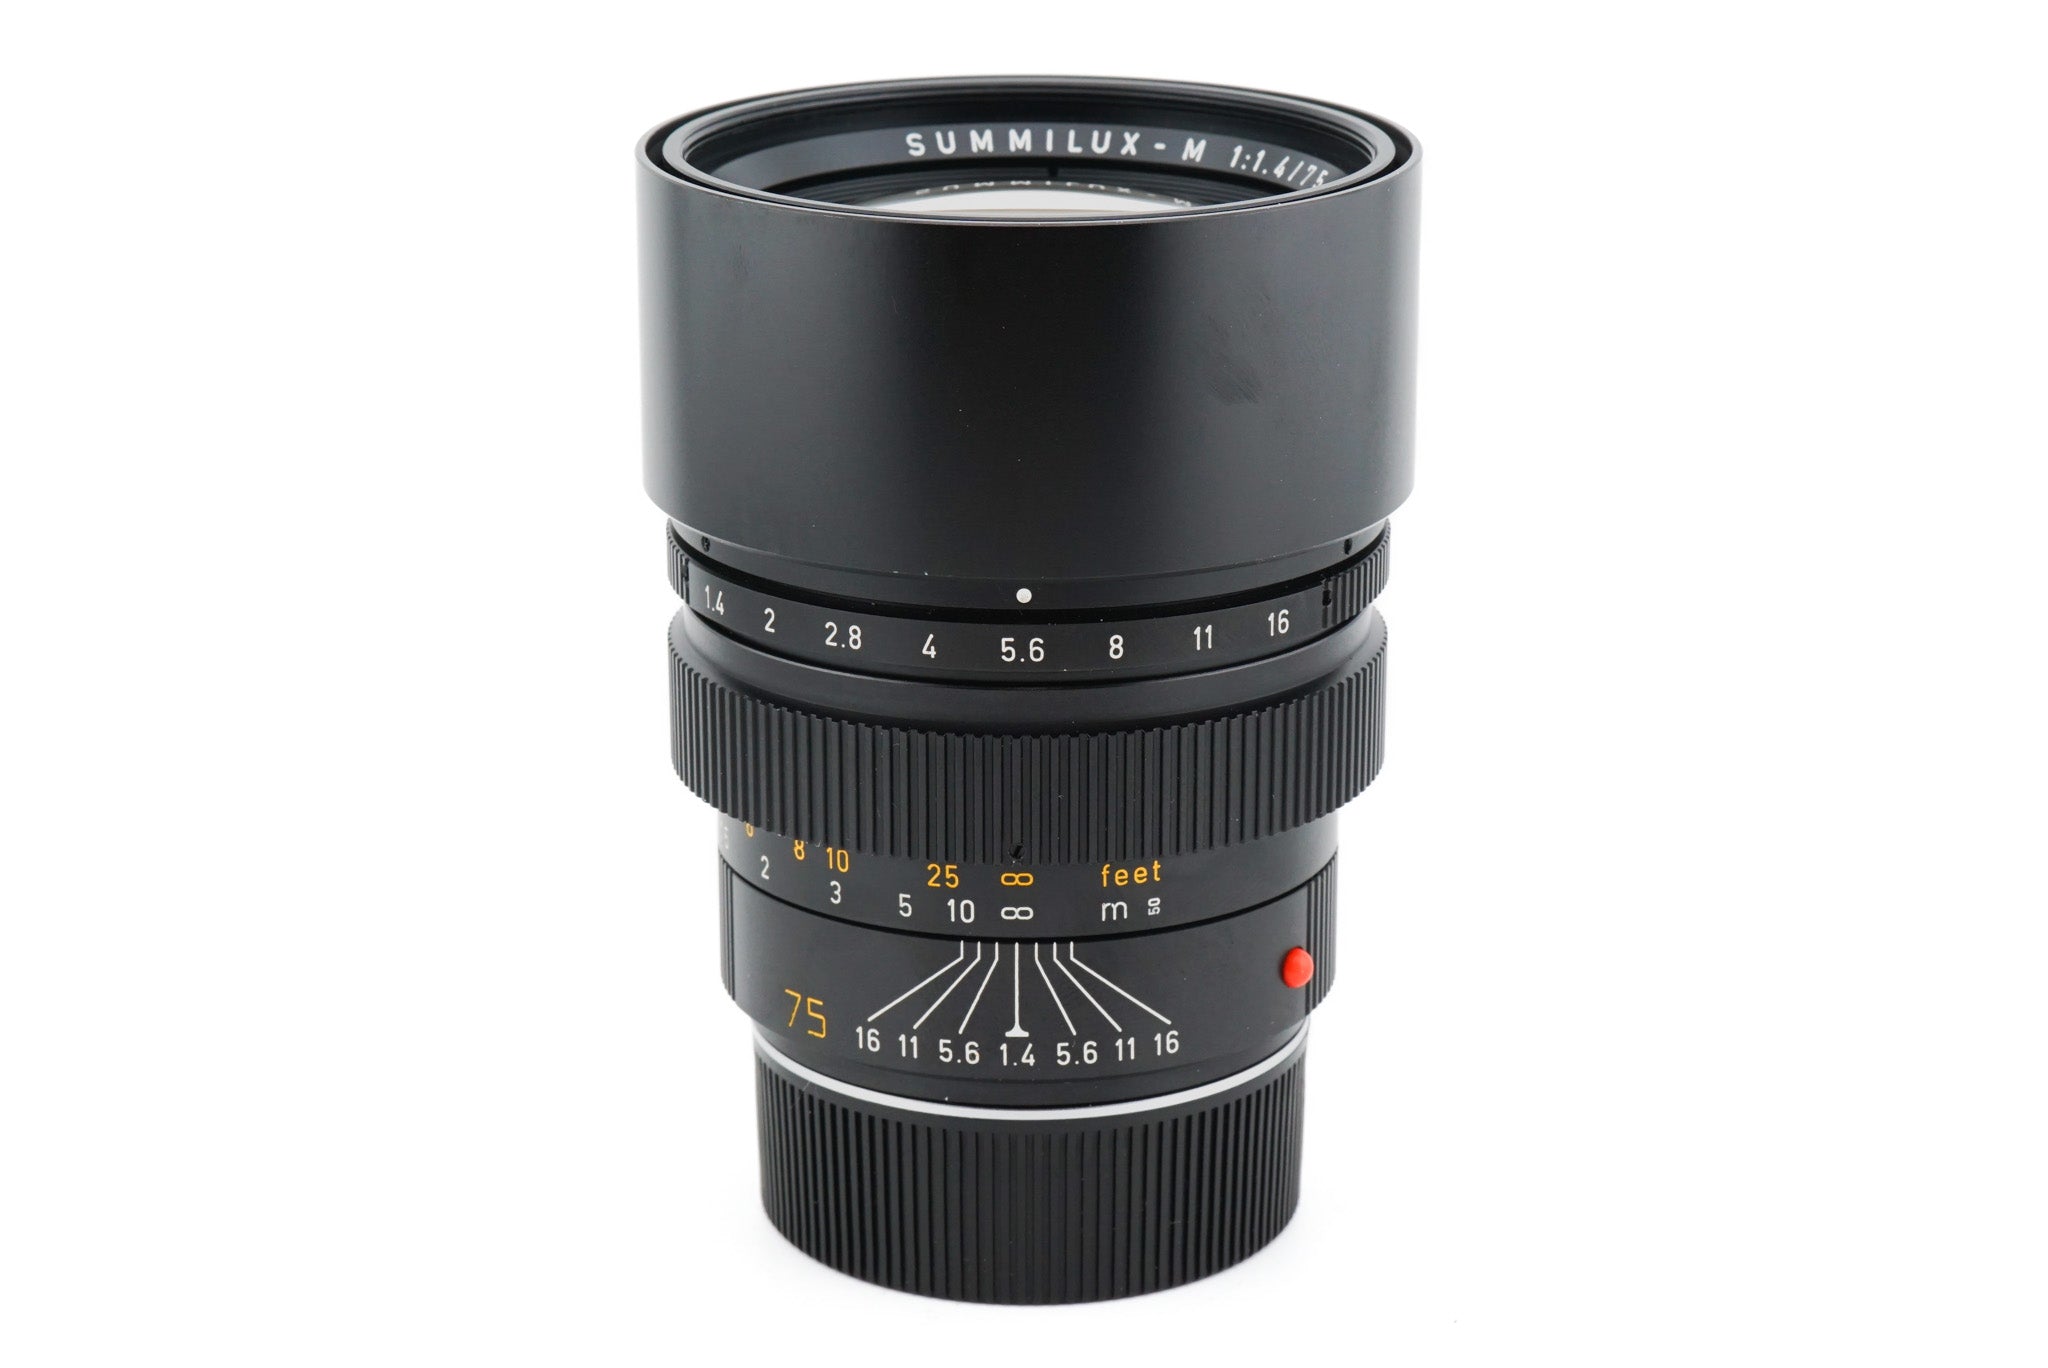 Leica 50mm f2 Summicron (Type III) - Lens – Kamerastore